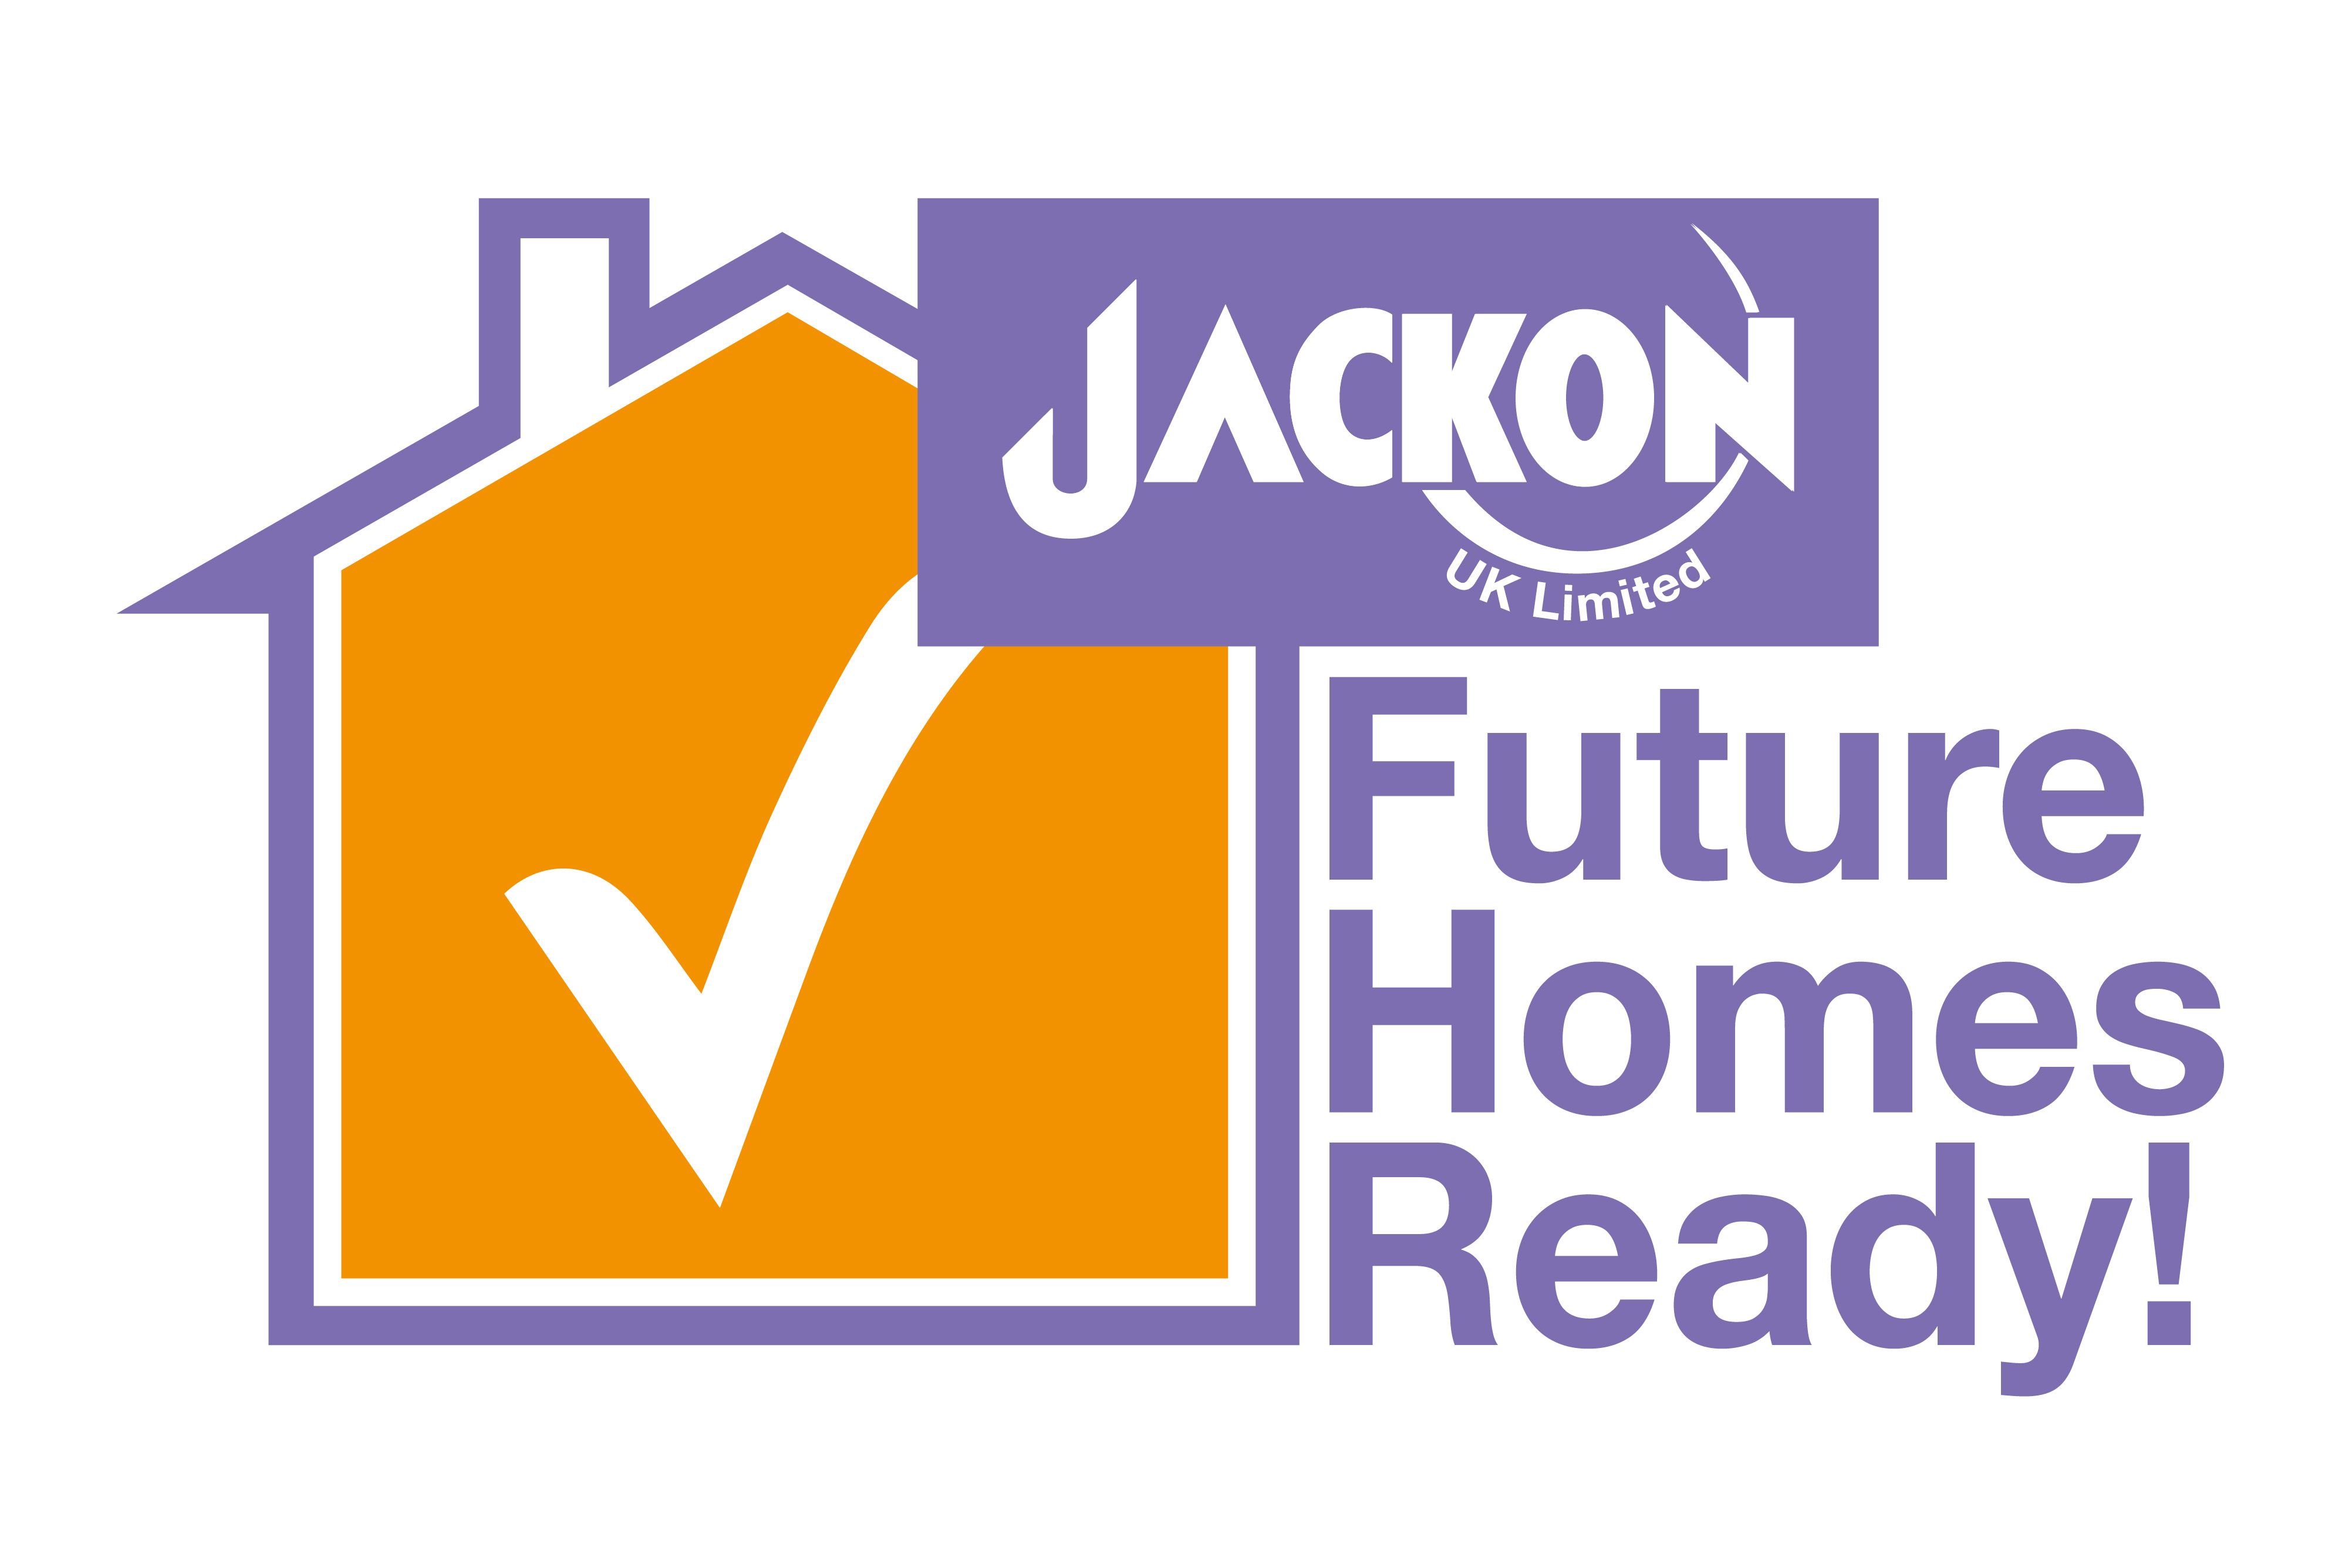 JACKON IS ‘FUTURE HOMES’ READY!